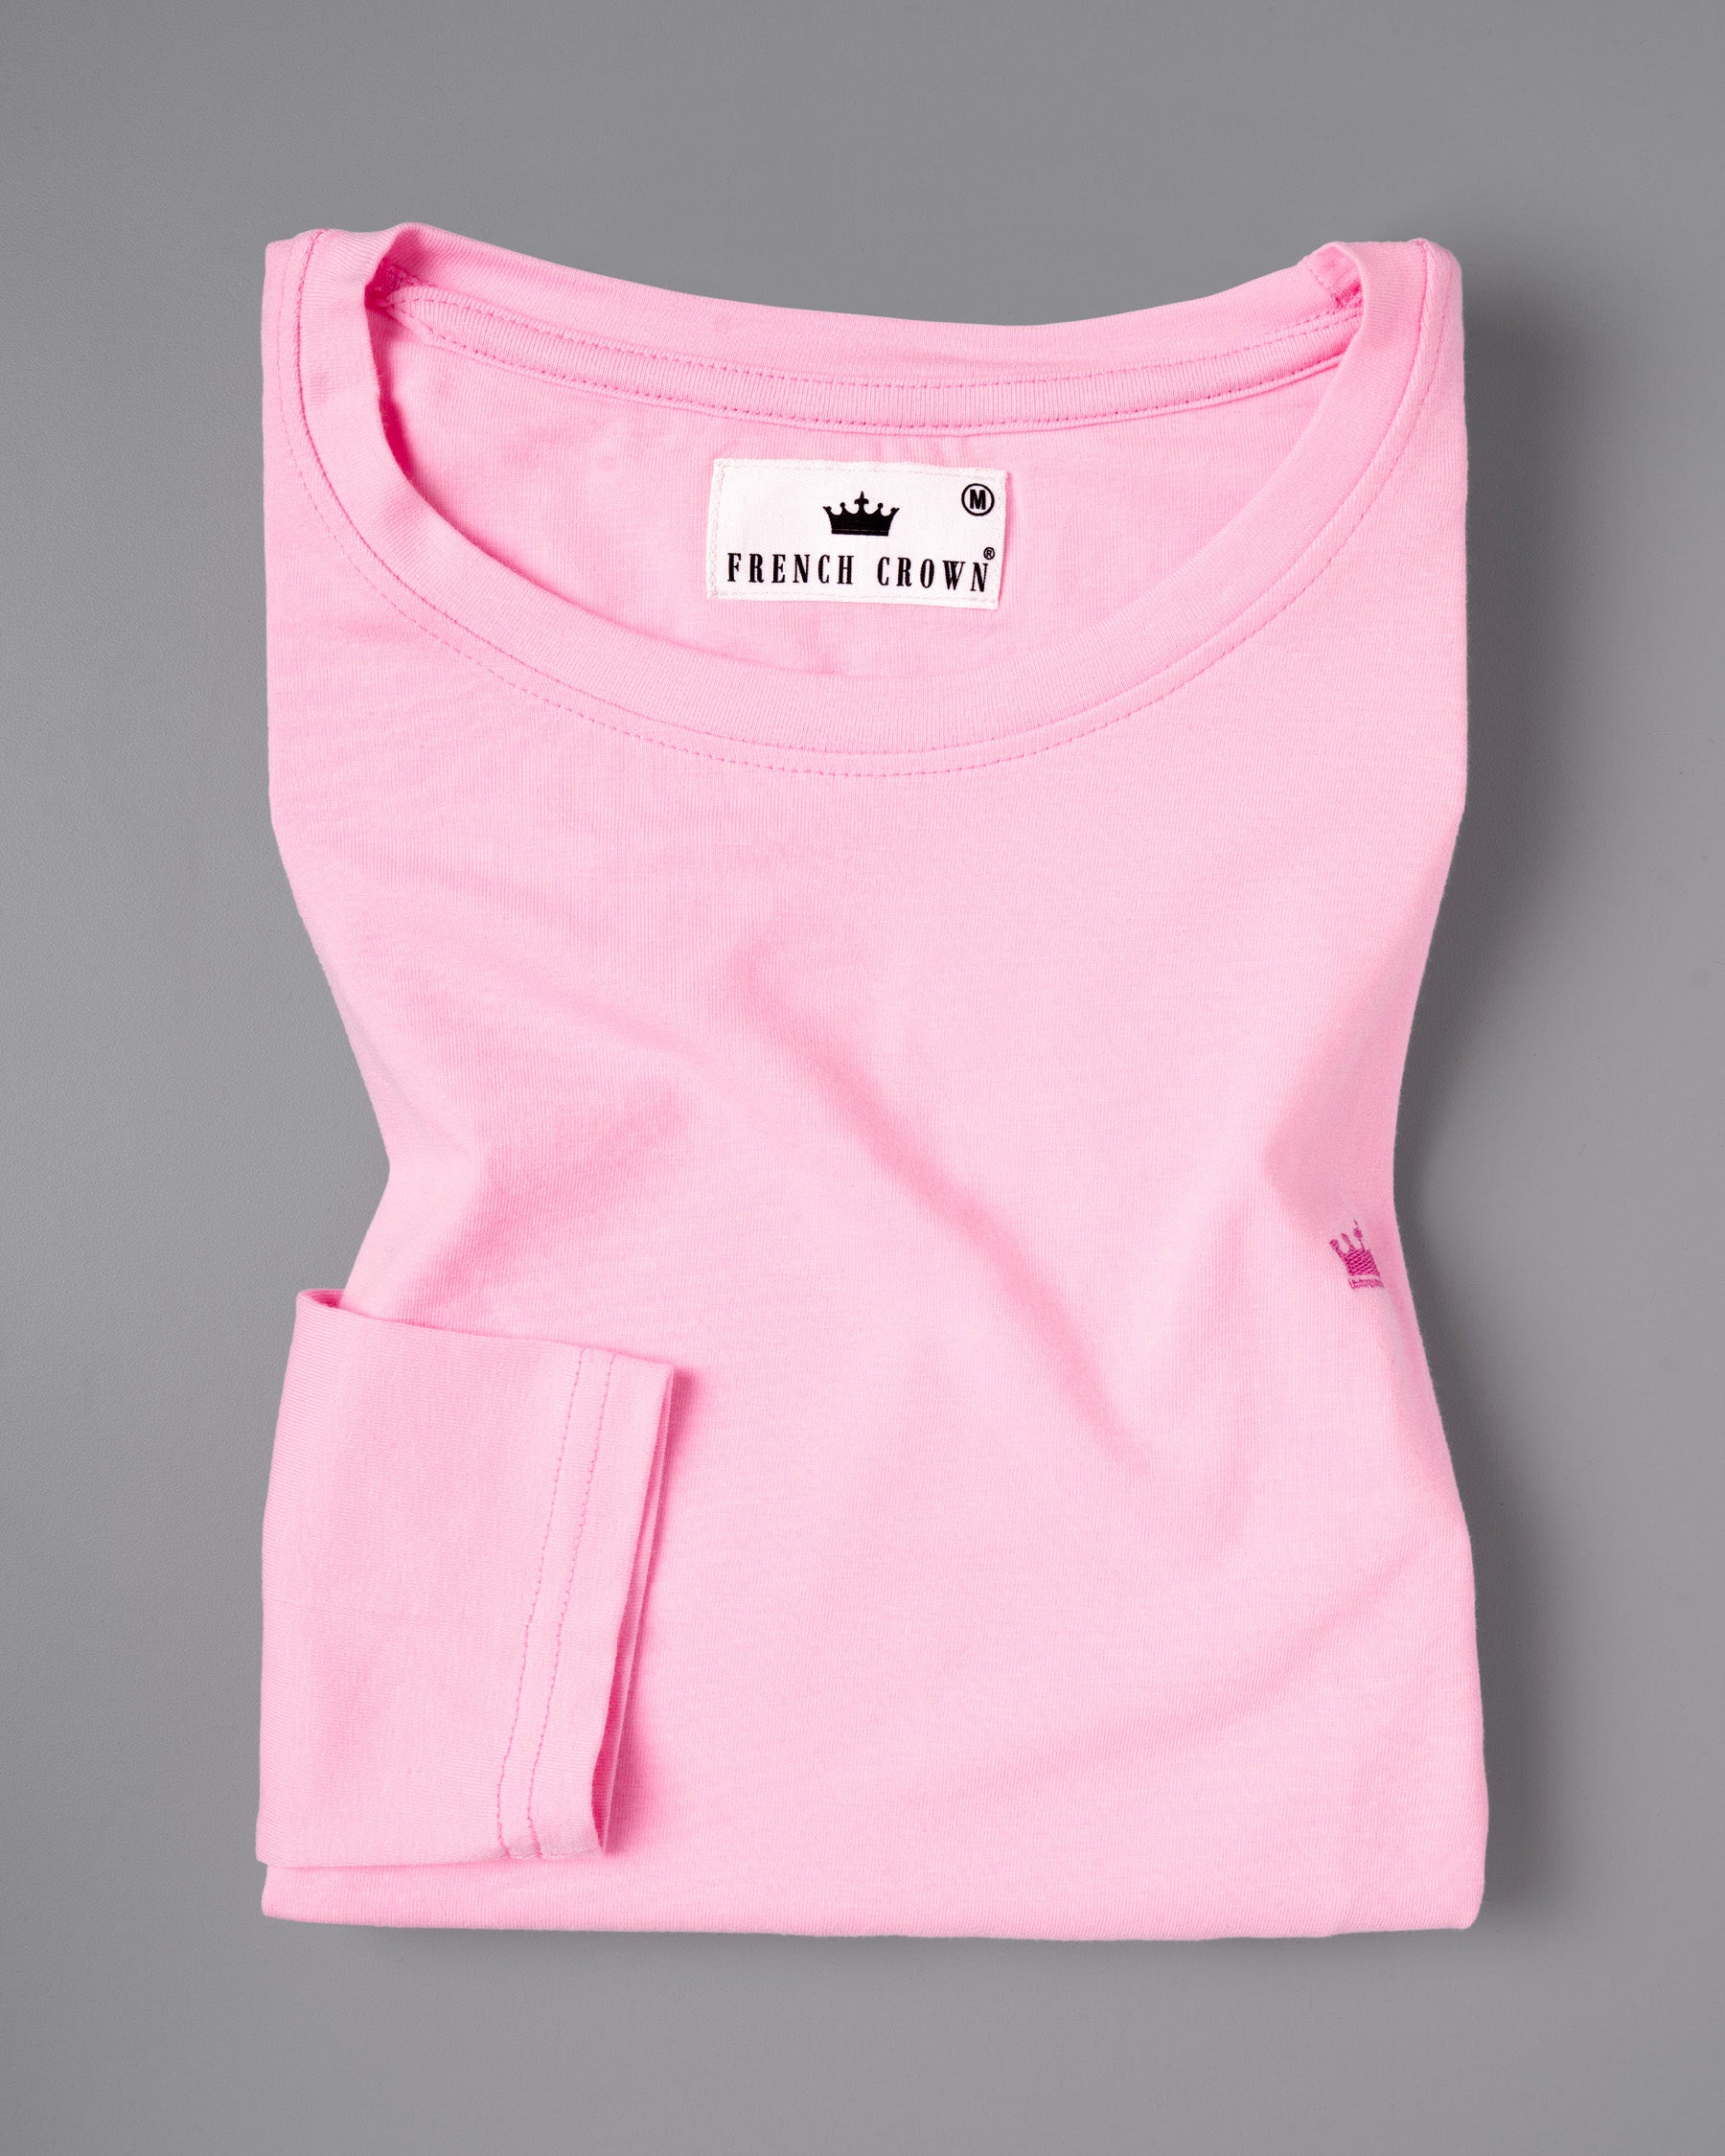 Classic Rose Pink Full-Sleeve Premium Cotton T-Shirt